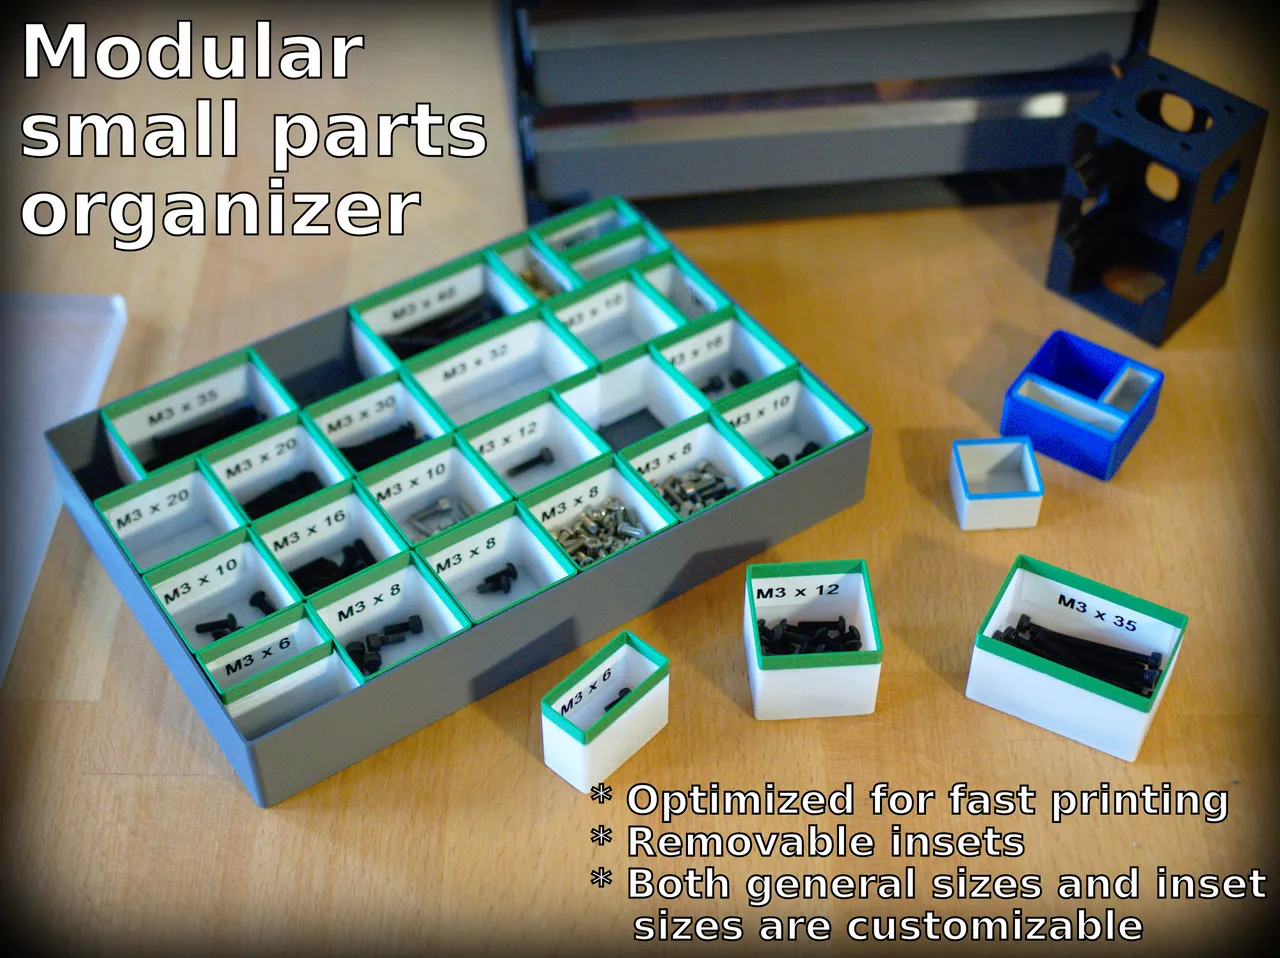 Modular small parts organizer by NsN